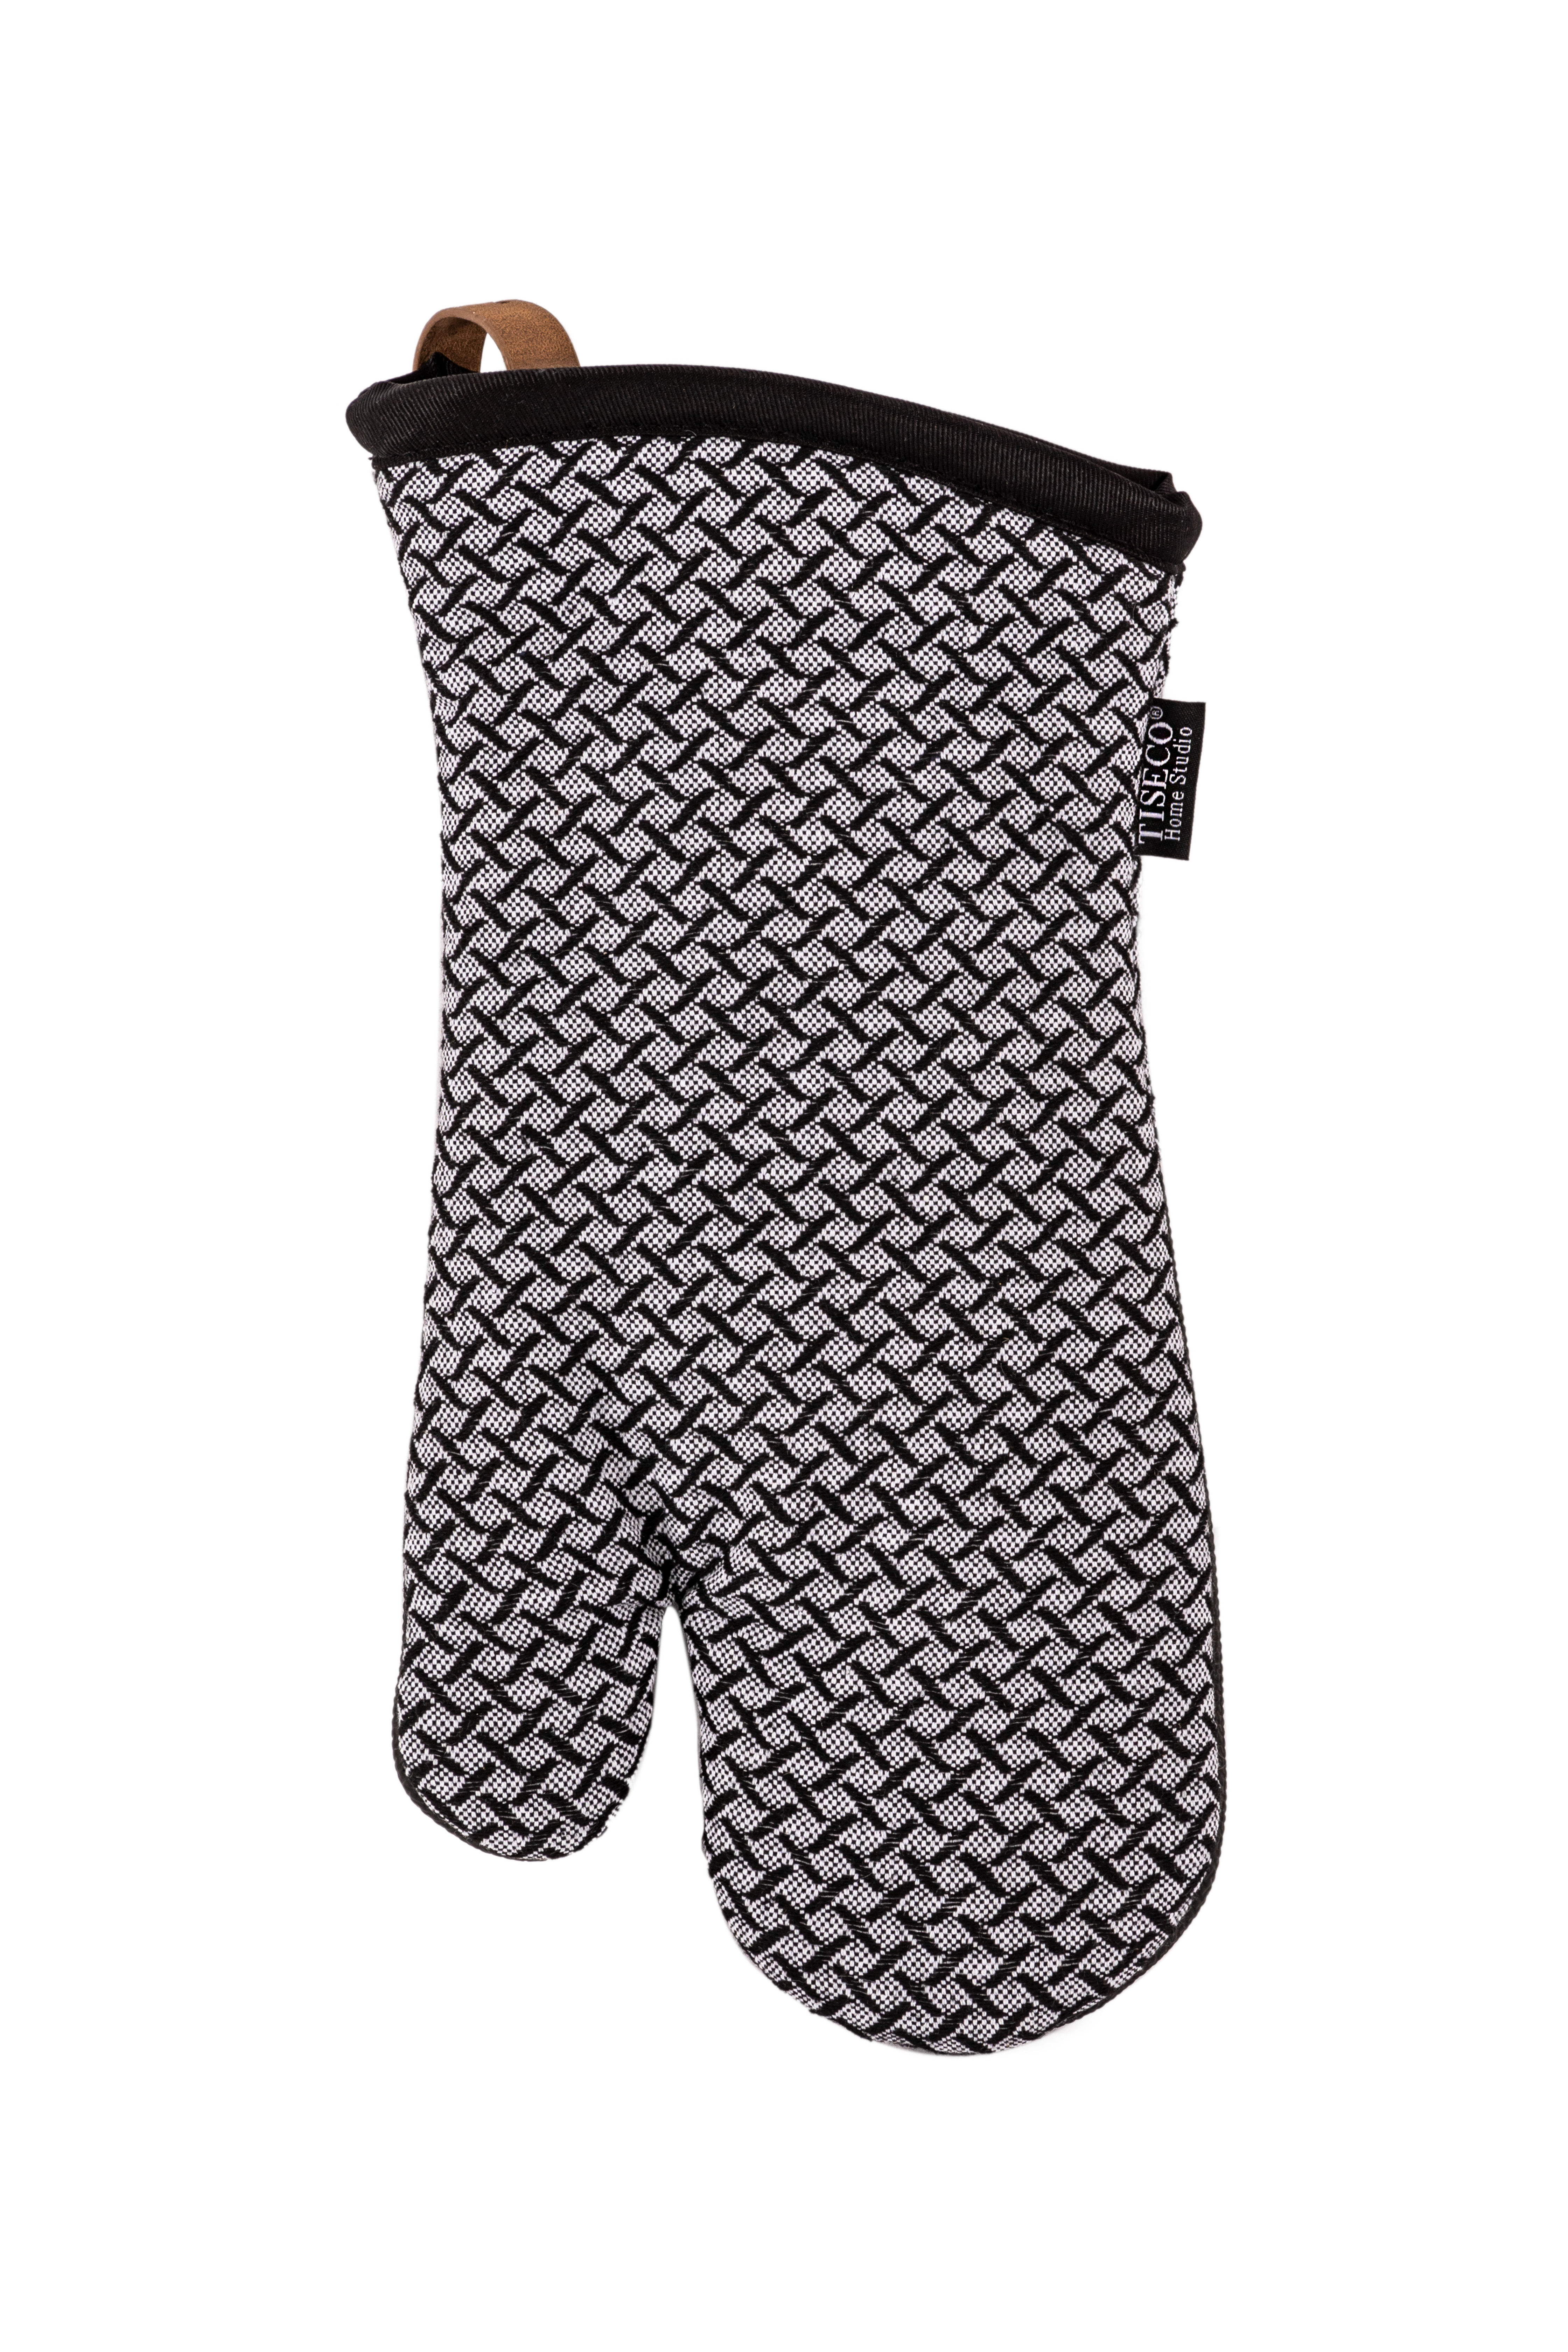 Oven glove (1R + 1L) SHERLOCK Lagarto, 17x33cm, black